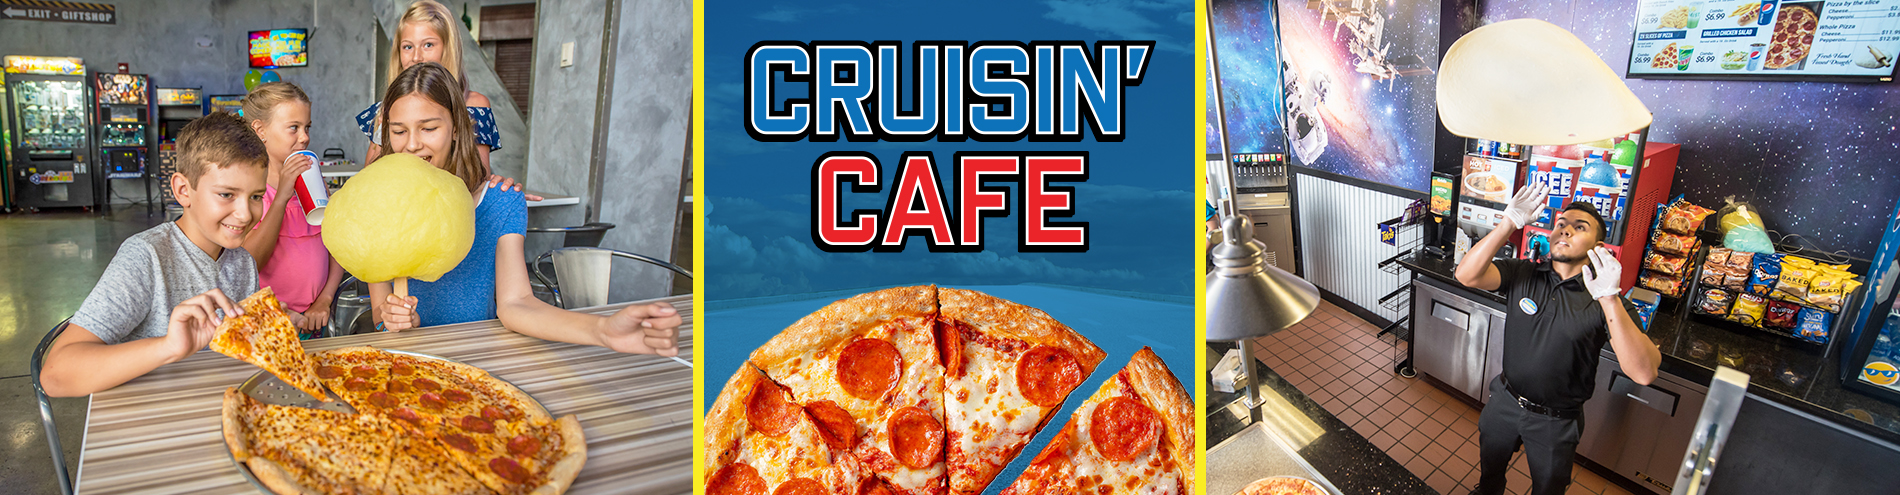 Cruisin' Cafe Header